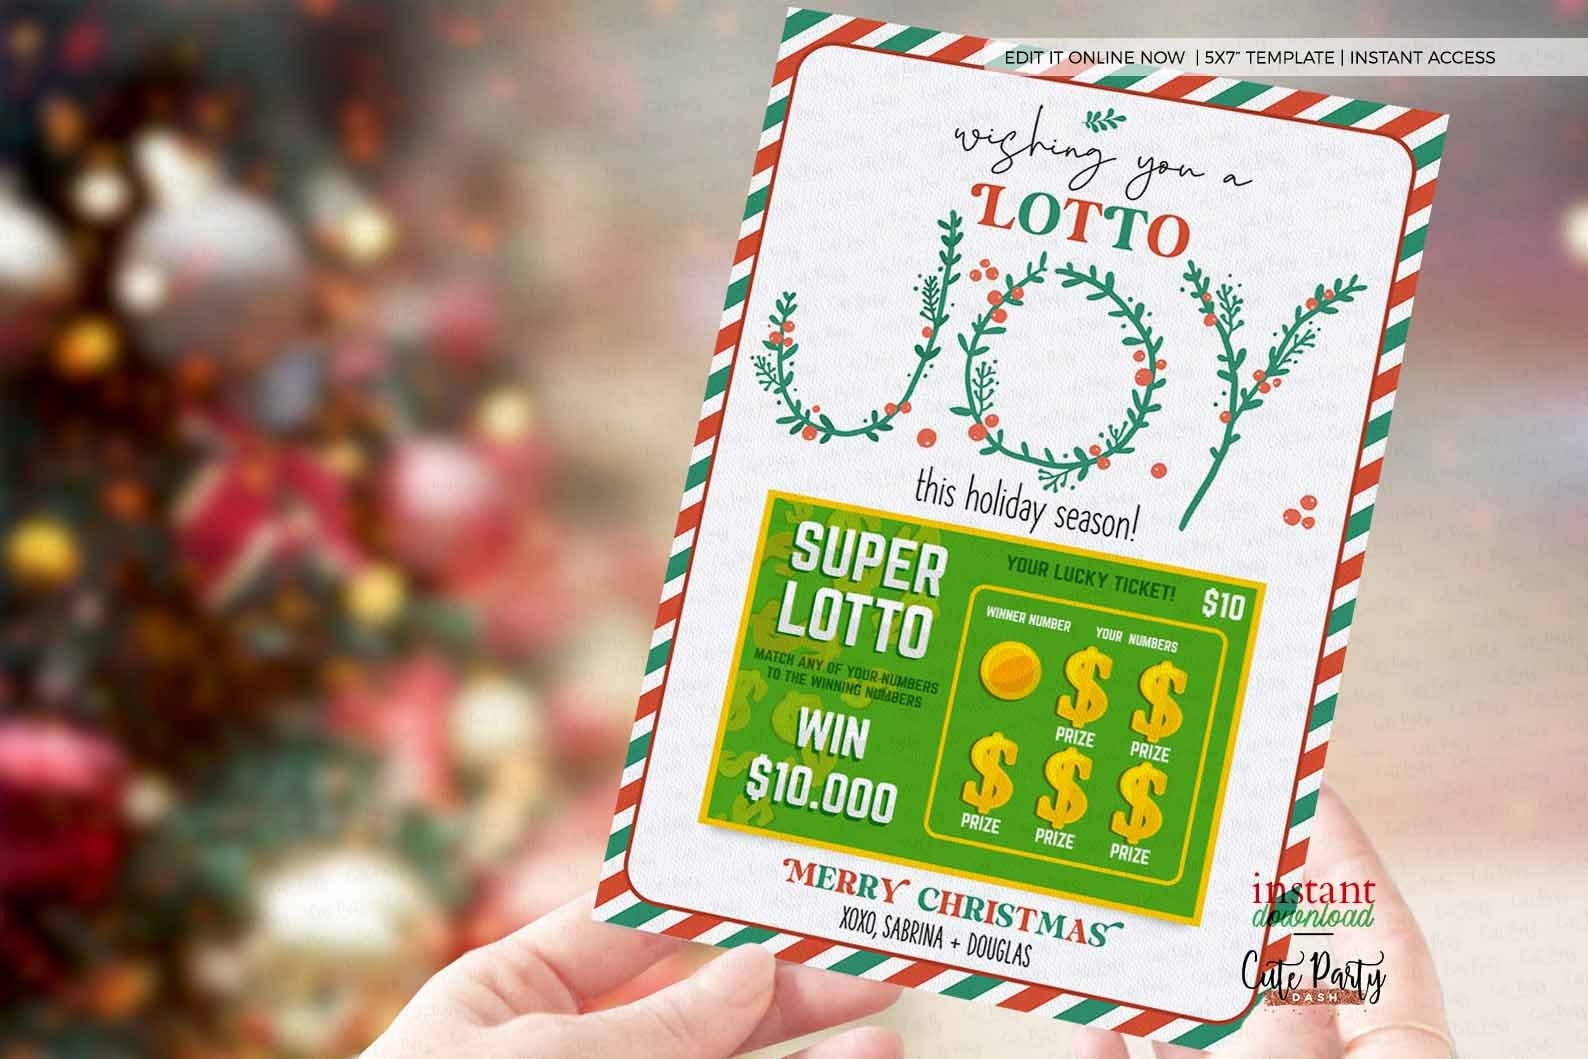 Lottery Ticket Holder Christmas 